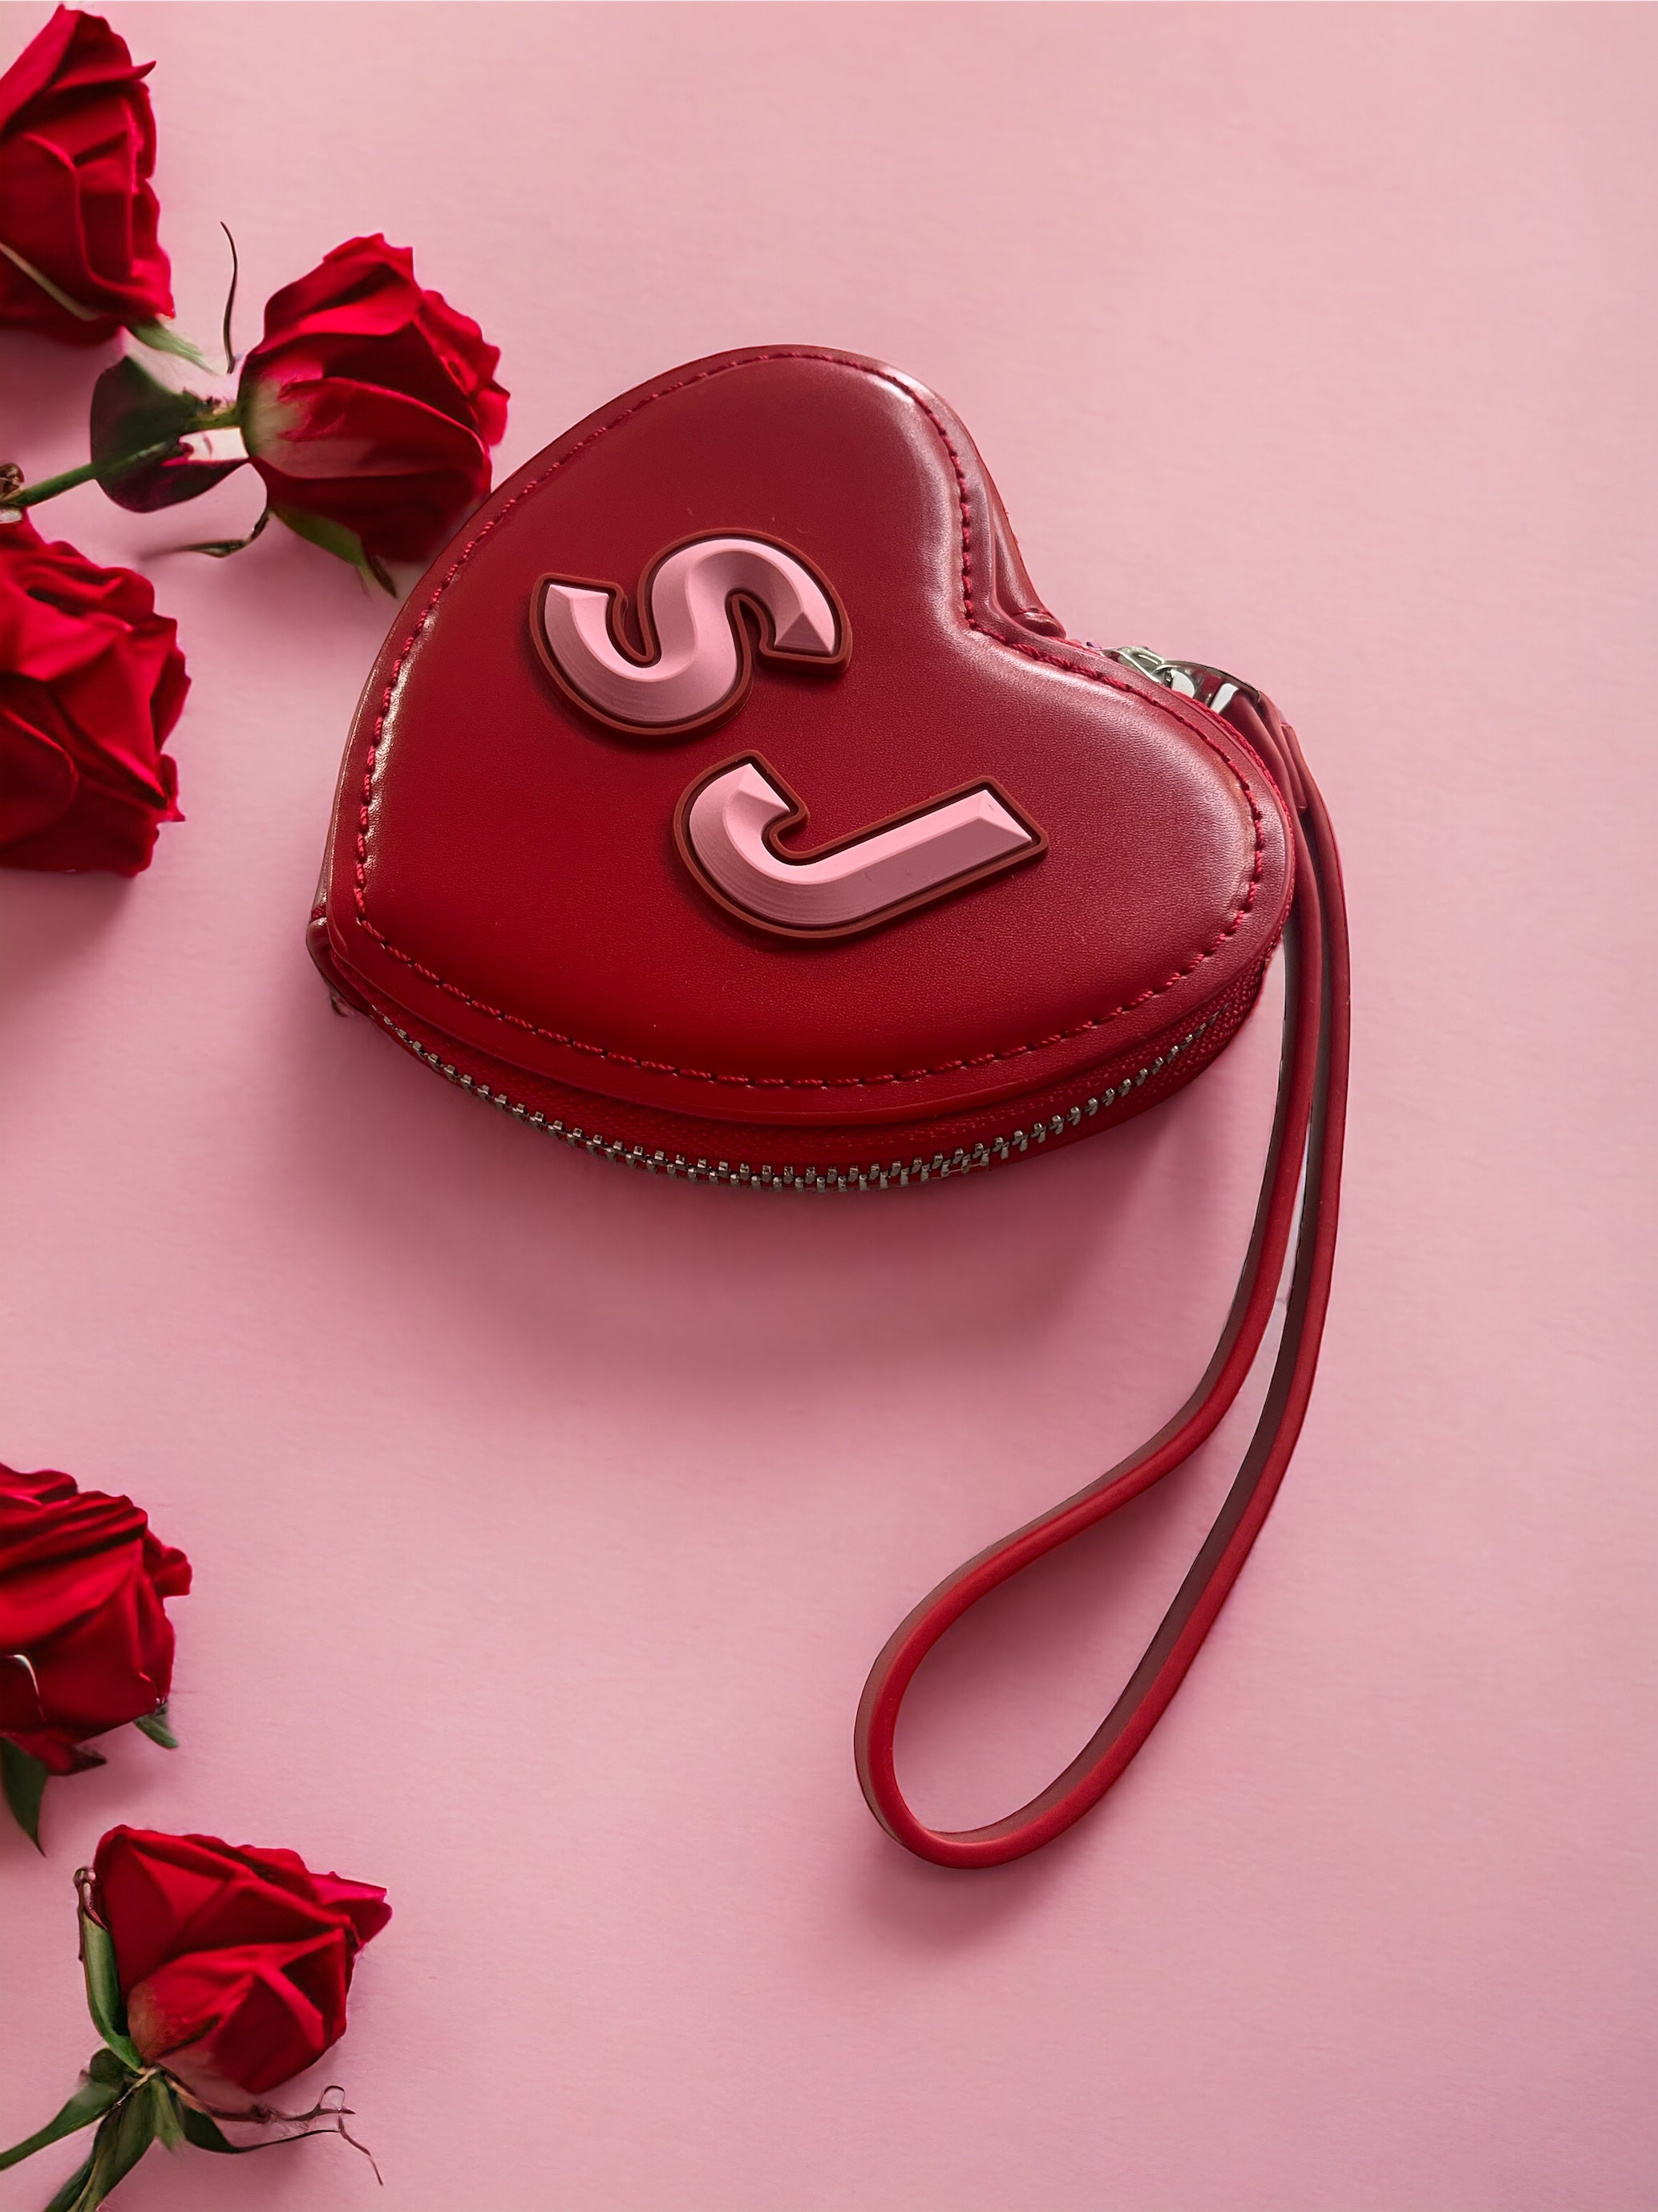 Heart shaped coin purse